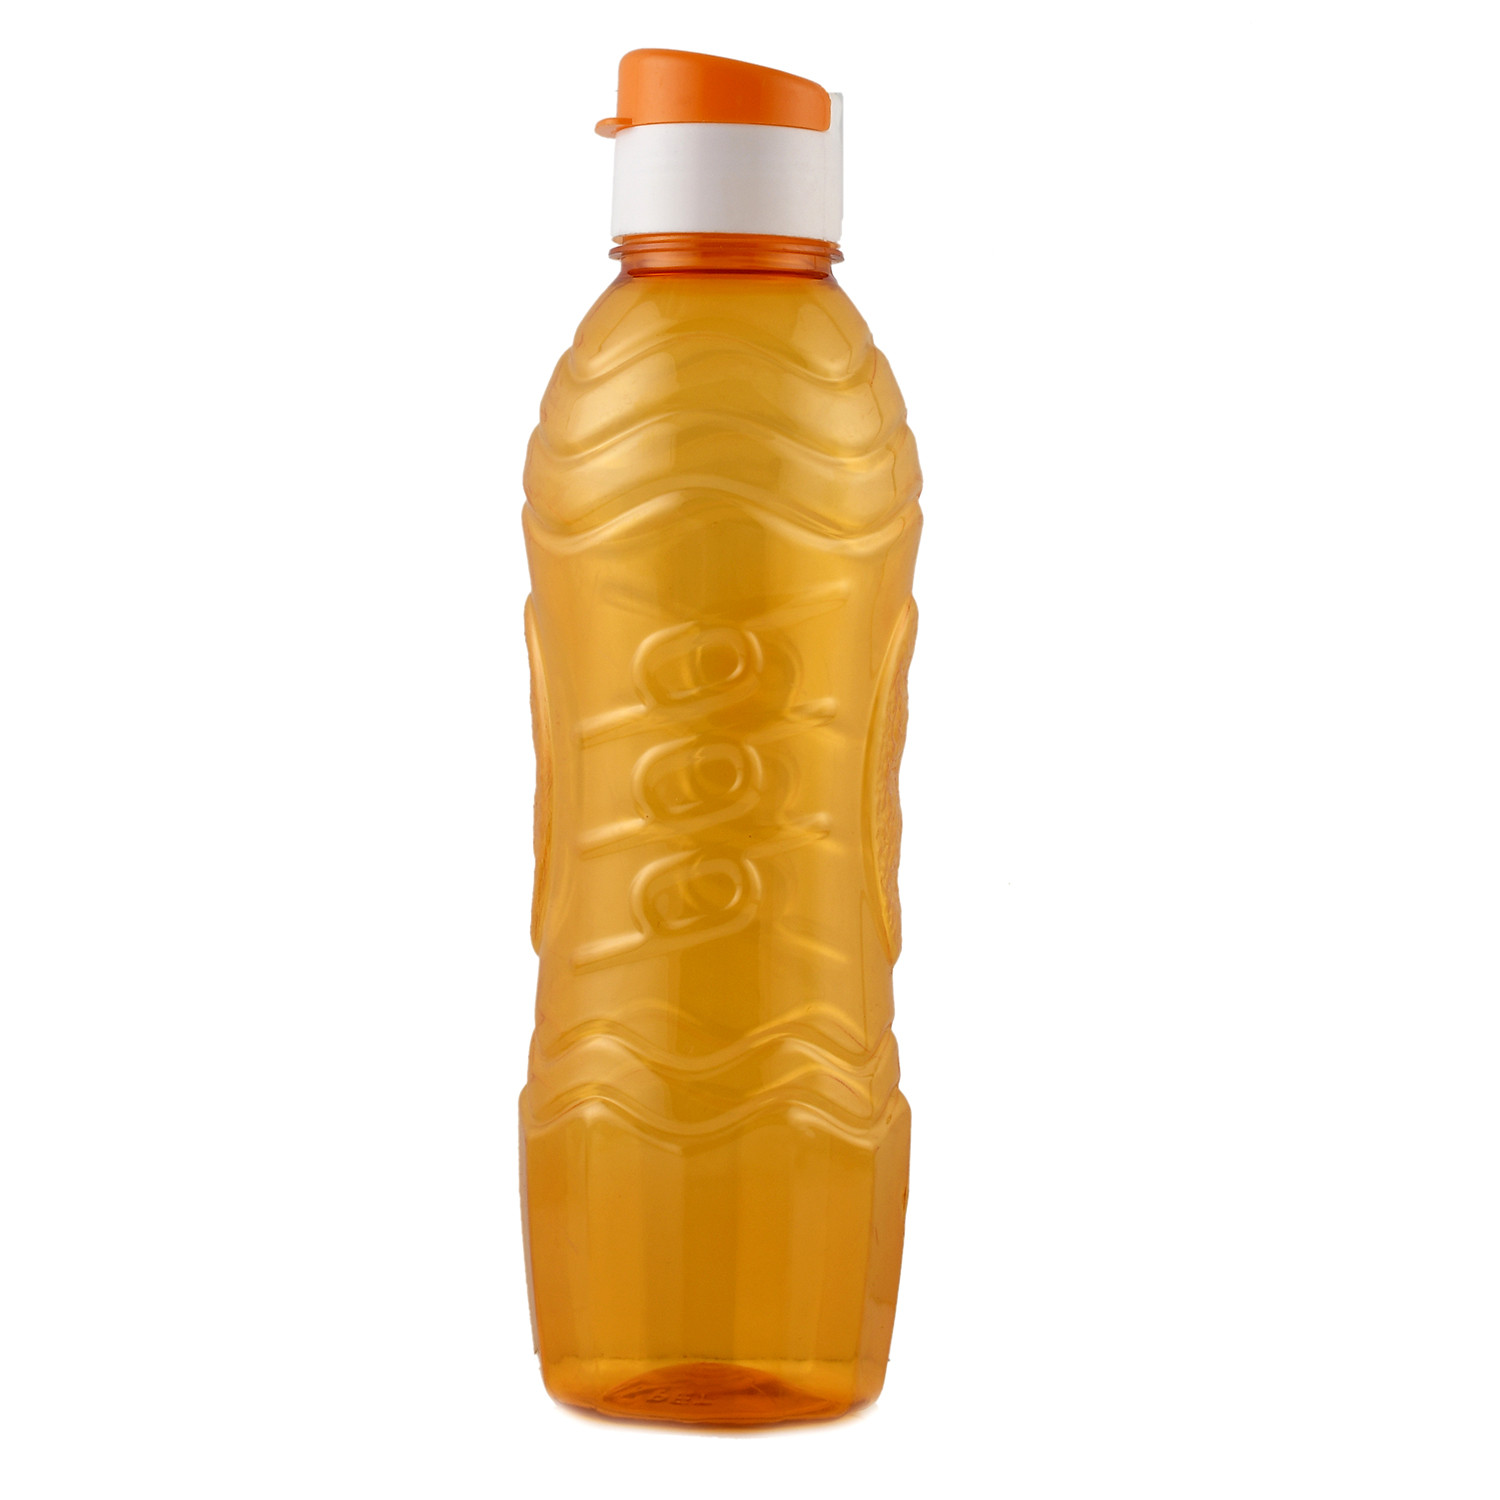 Kuber Industries Plastic Fridge Water Bottle Set with Flip Cap (1000ml, Pink & Orange)-KUBMART1492